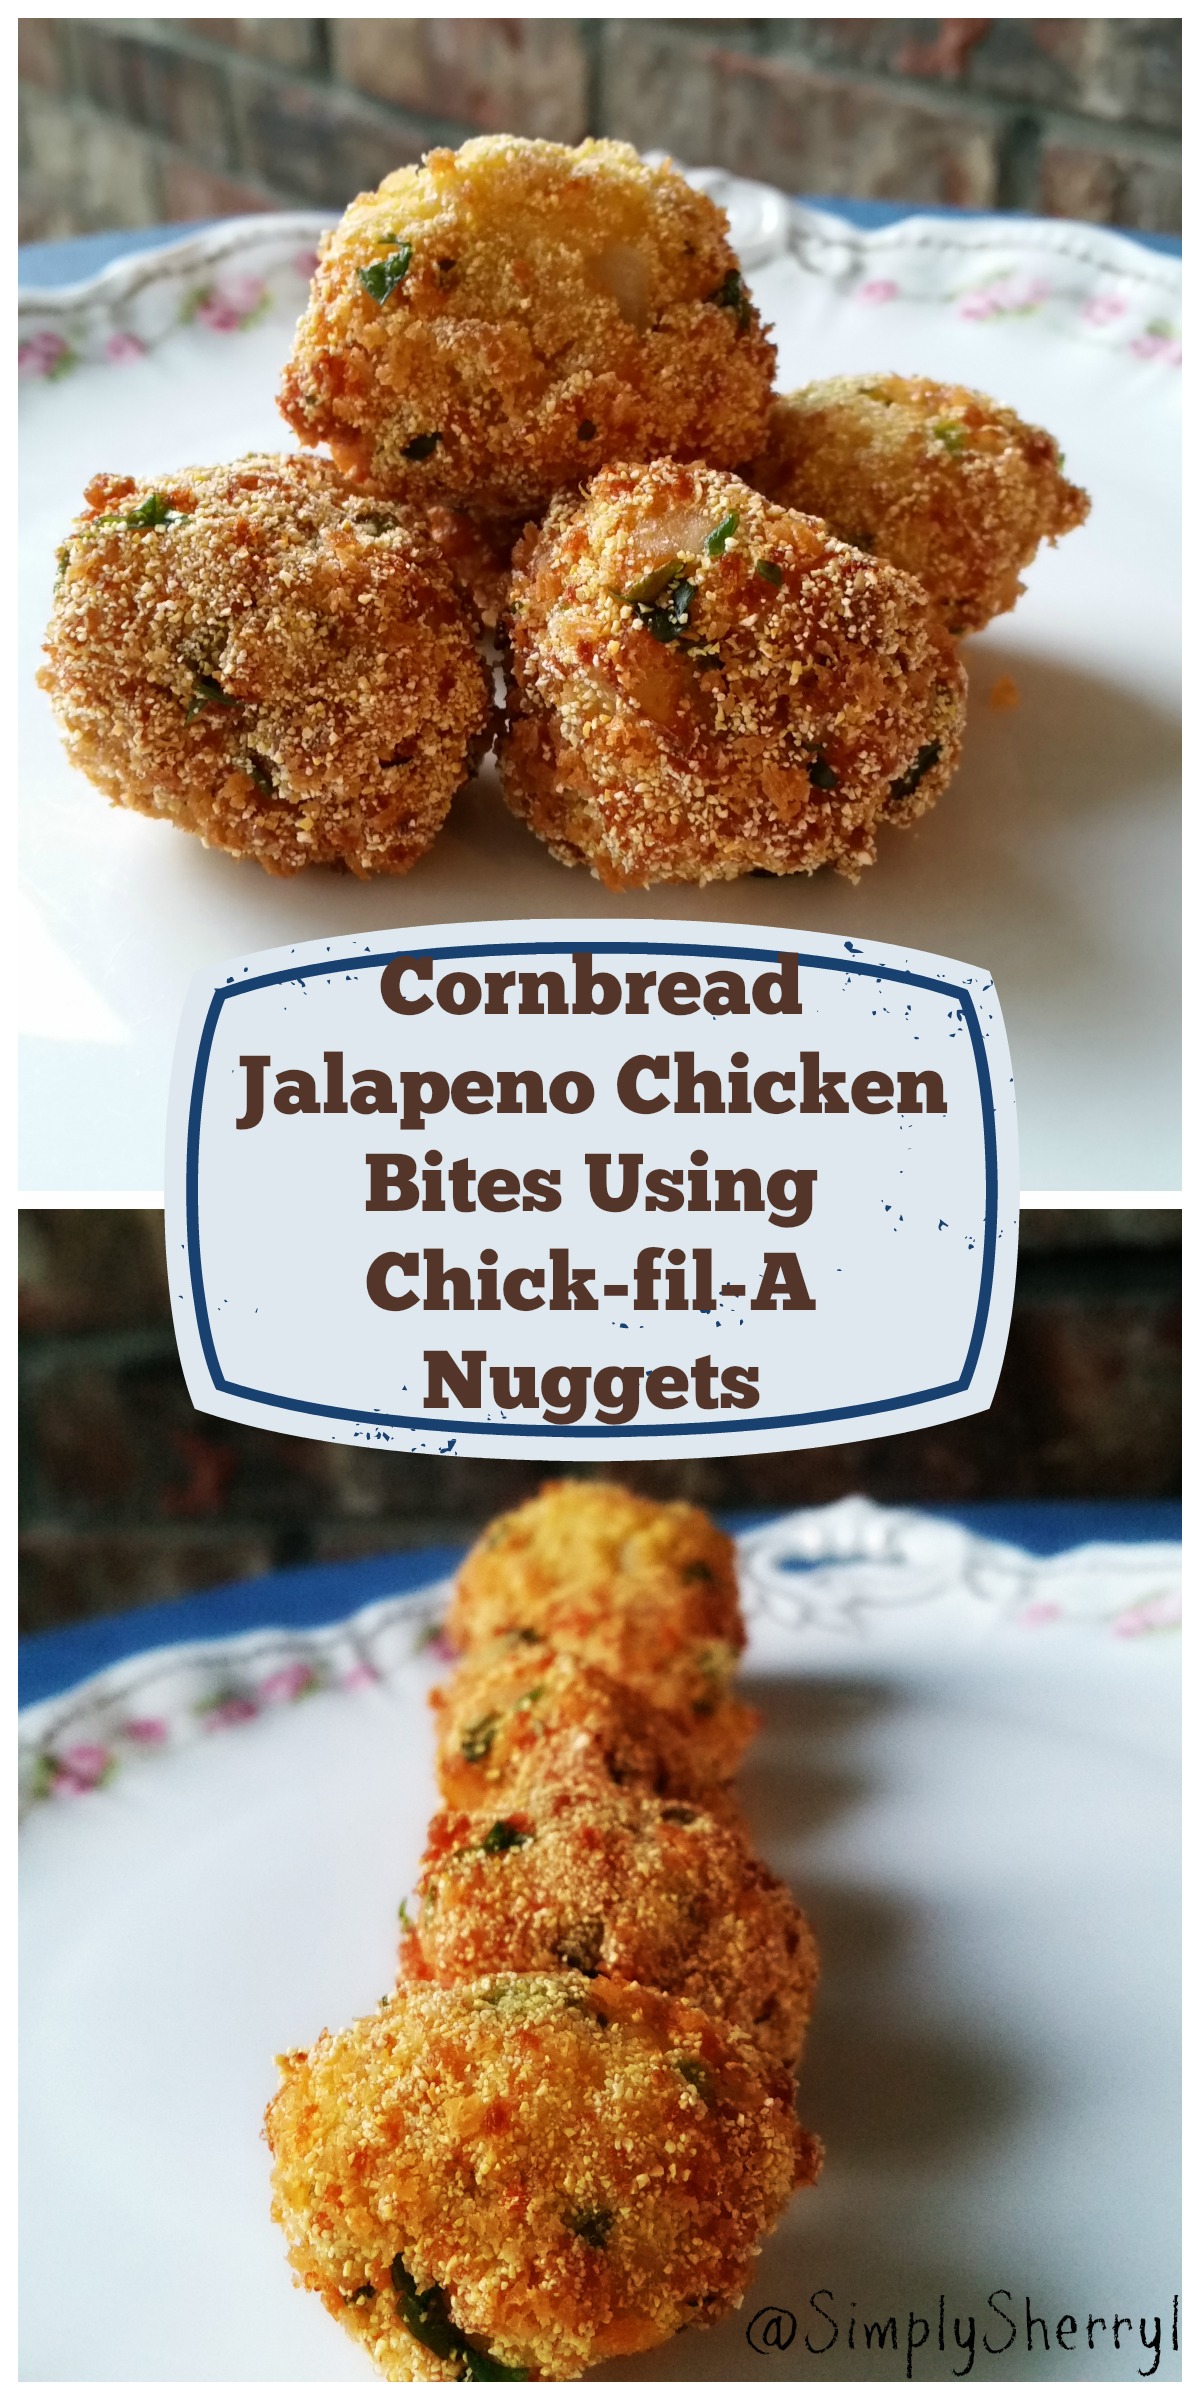 Cornbread Jalapeno Chicken Bites Using Chick-fil-A Nuggets